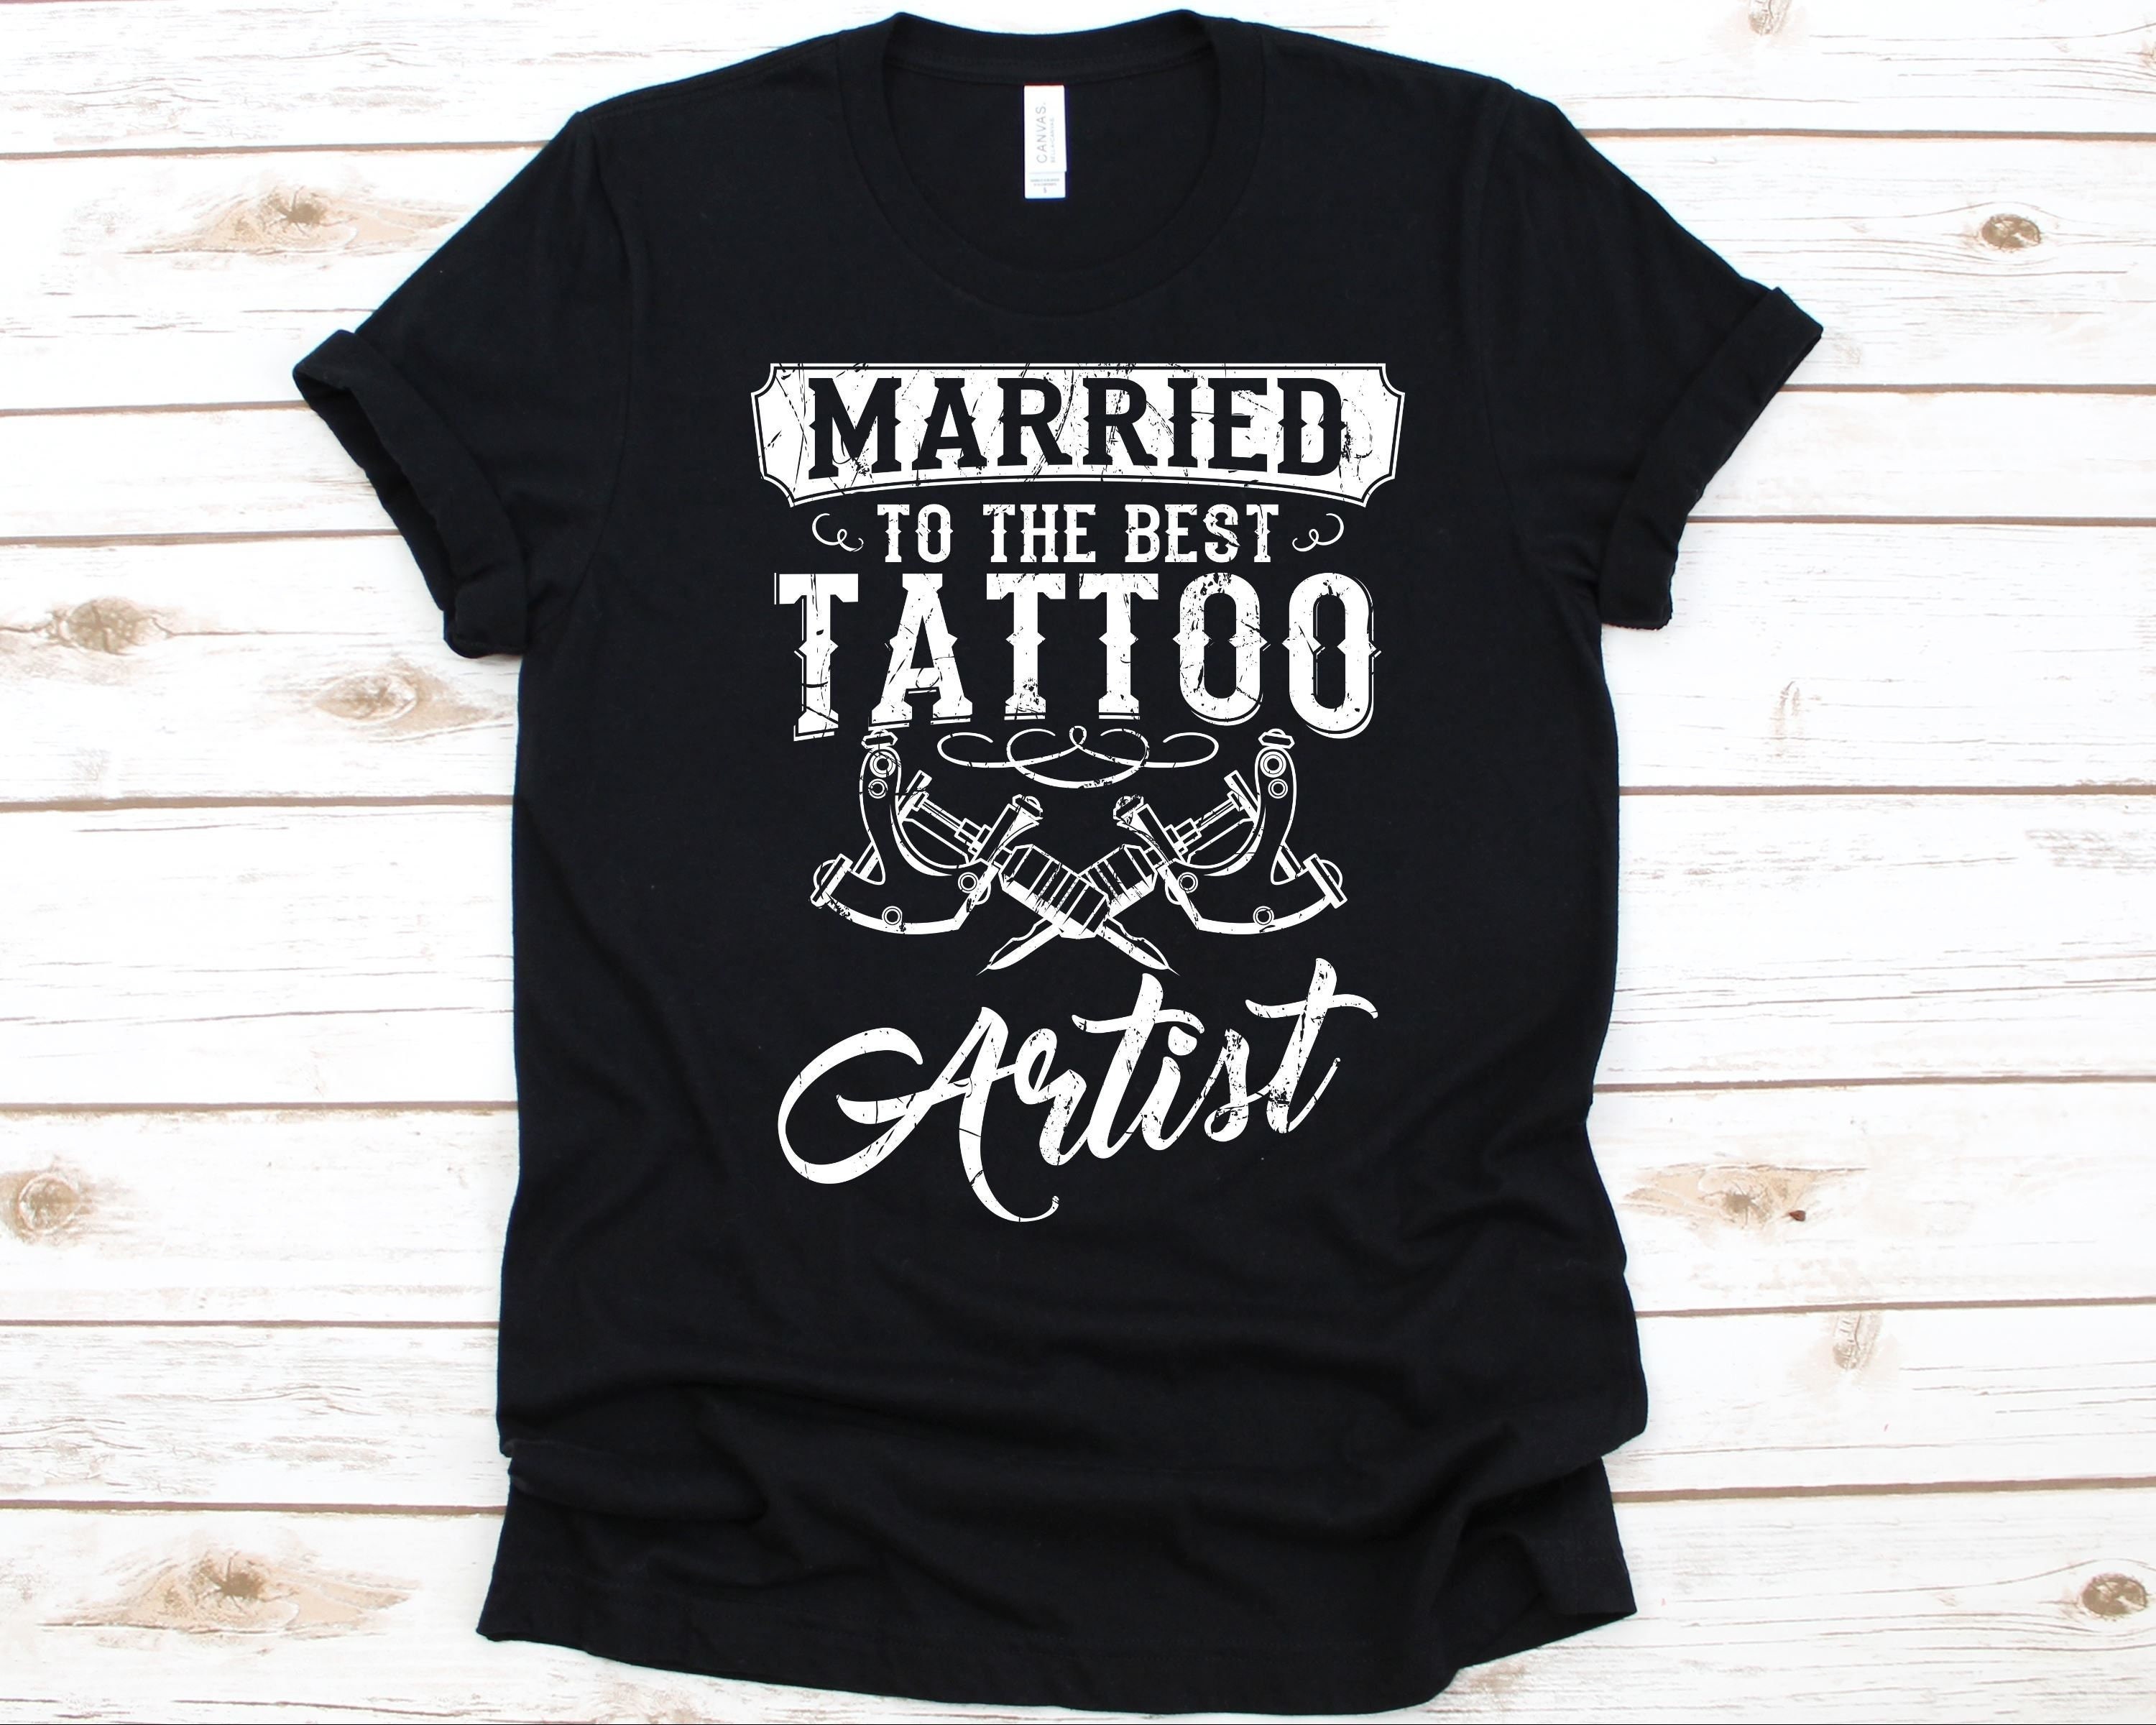 Tattoo artist Trust me Im a Tattoo artist Mens T shirt White Birthday  Gift 00527  affordable organic tshirts beautiful designs